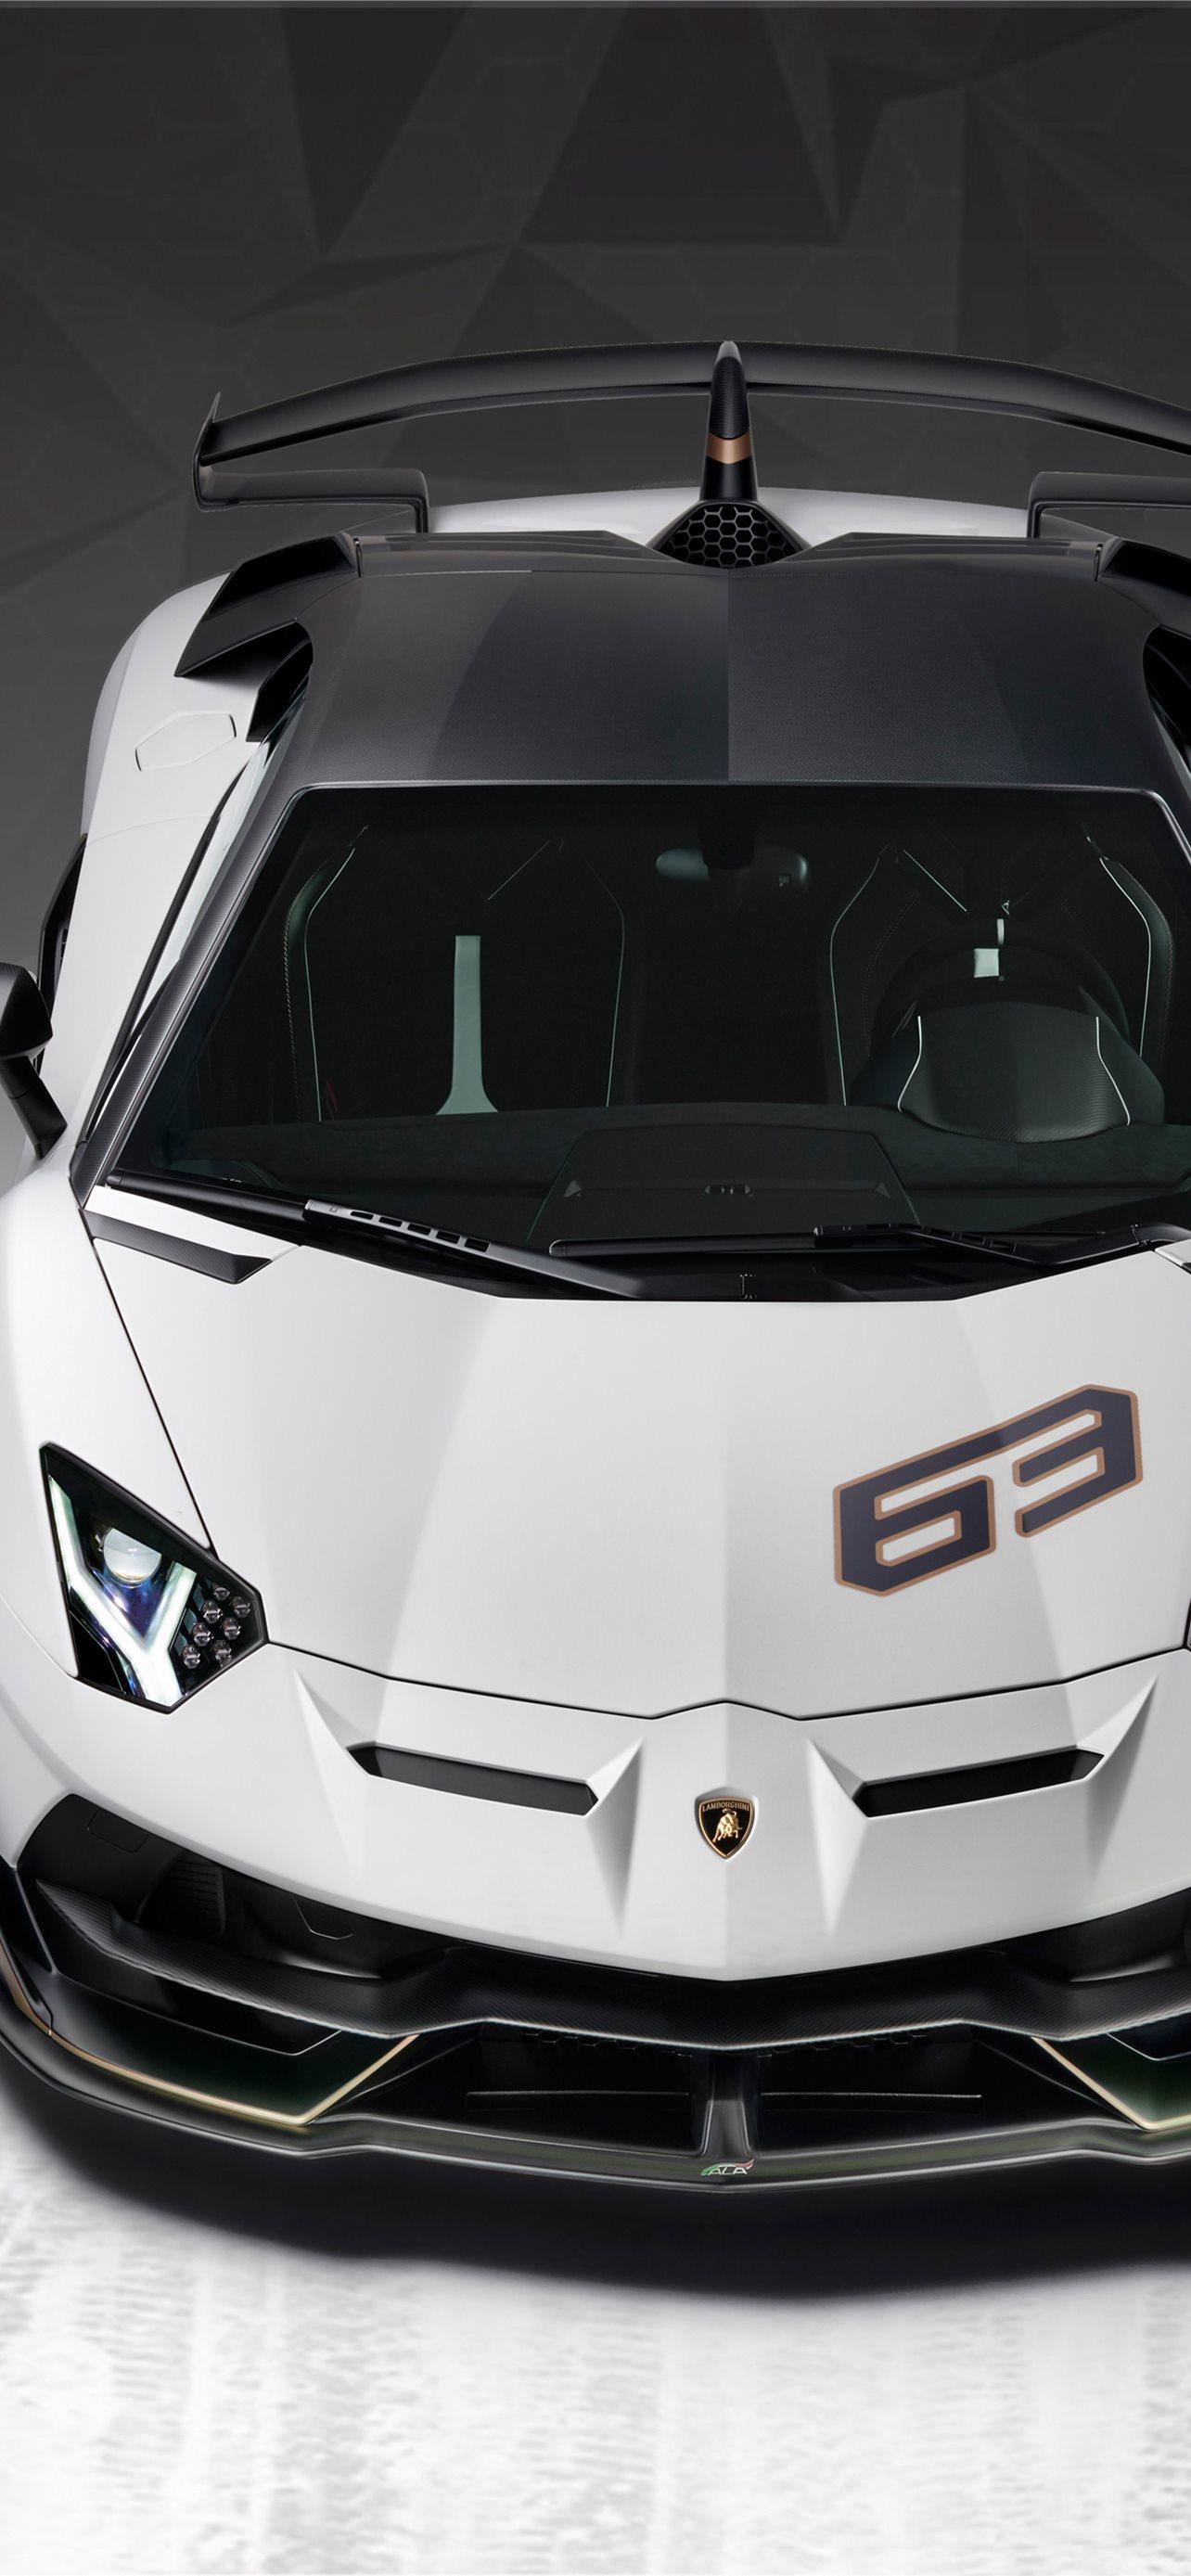 Lamborghini Aventador S iPhone Wallpaper